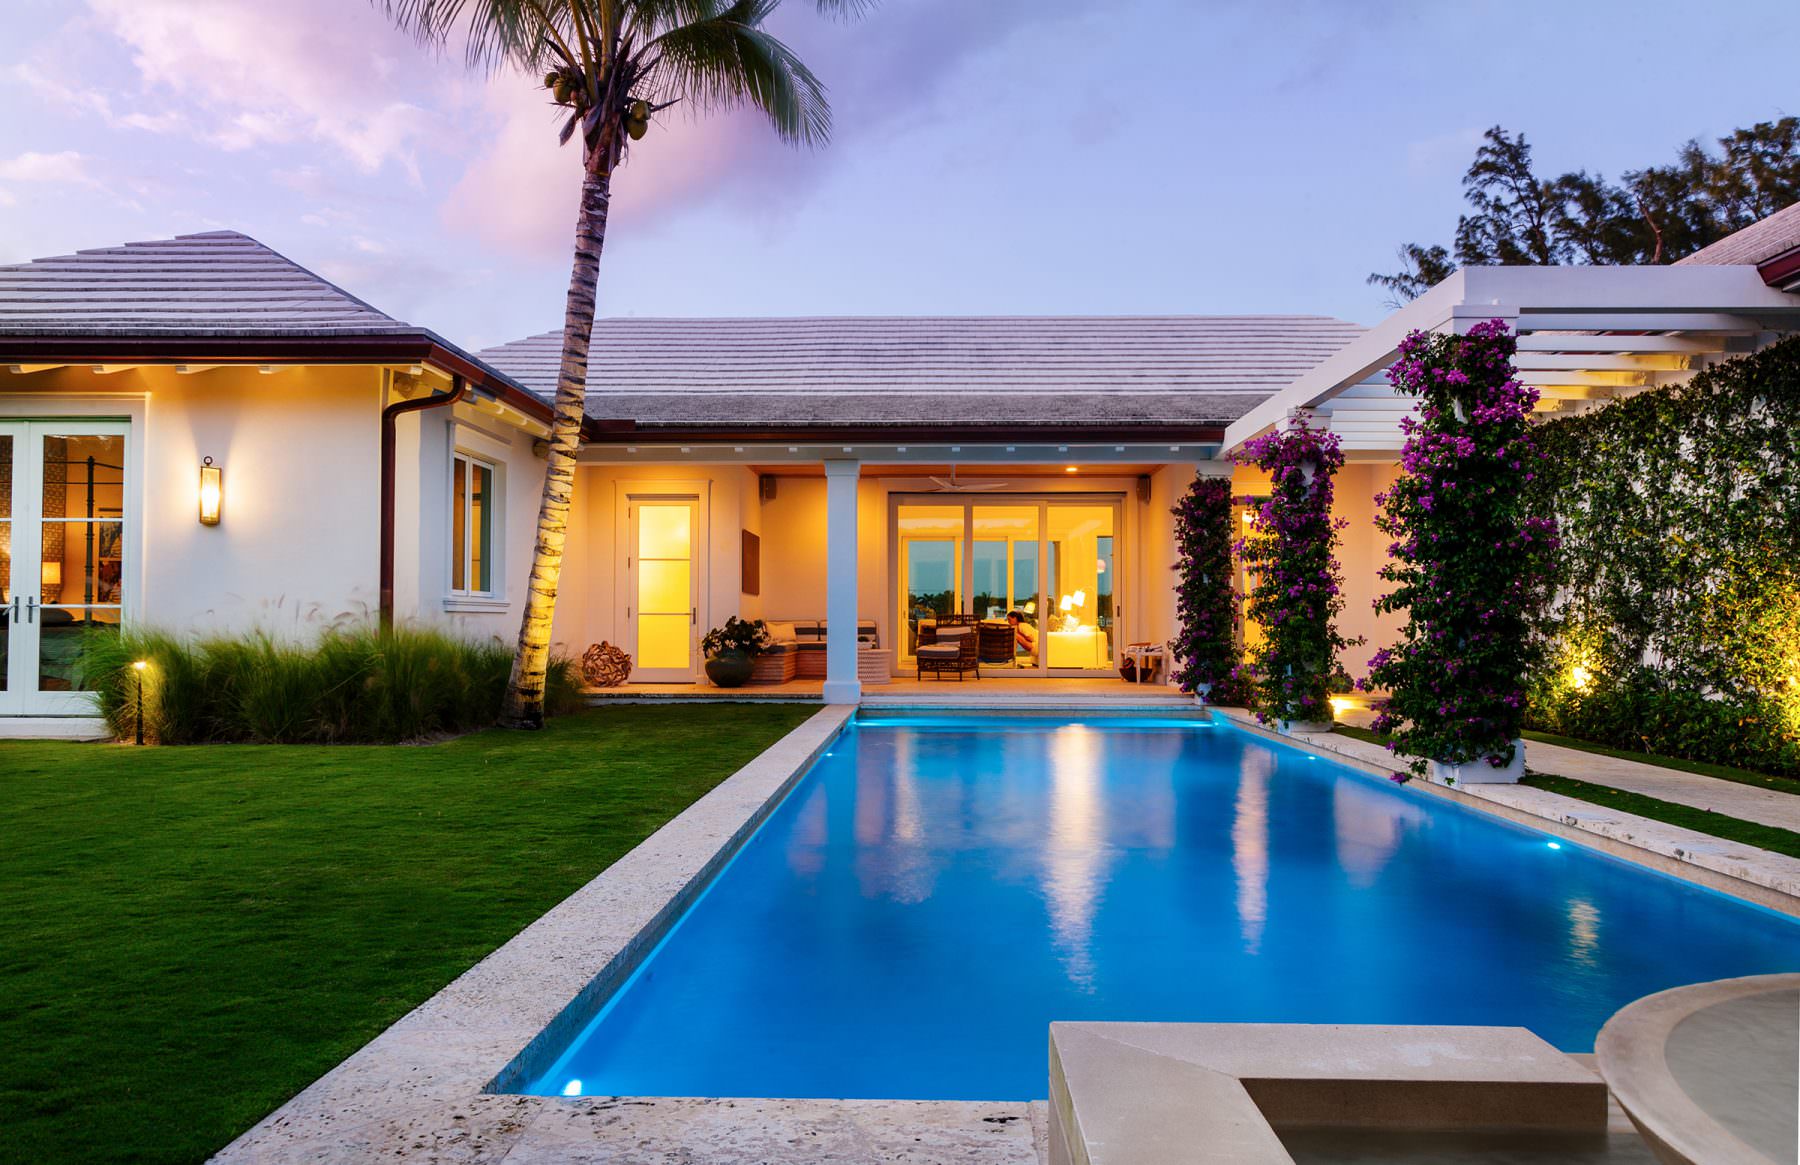 image of Bohemian Beach House backyard with pool and palms